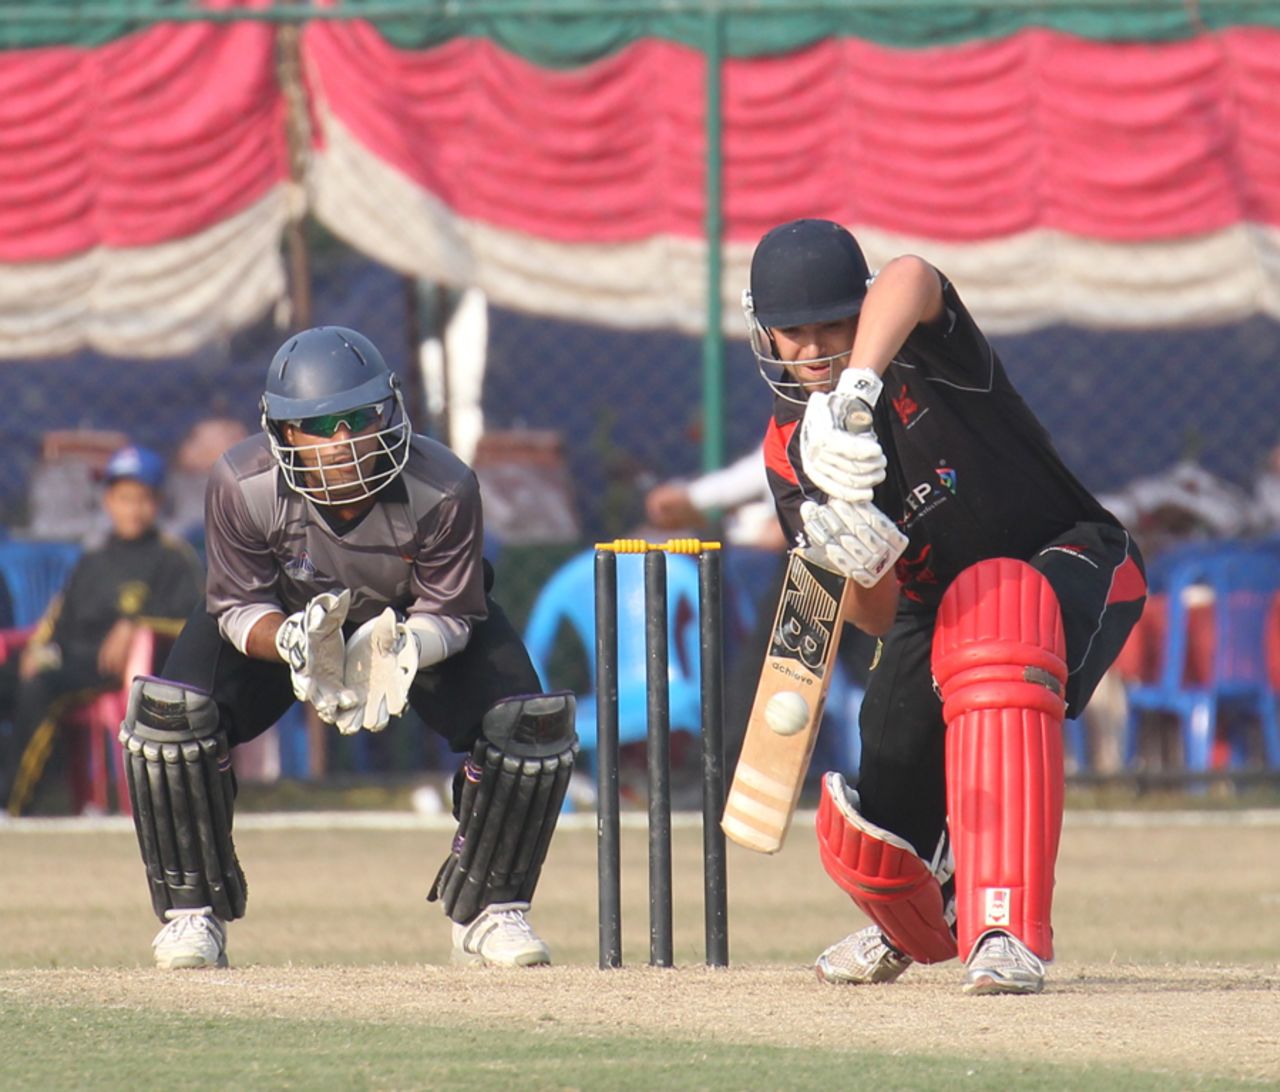 Courtney Kruger batting against UAE at the ACC Twenty20 Cup 2011 in Kathmandu, Nepal, on 6th December 2011